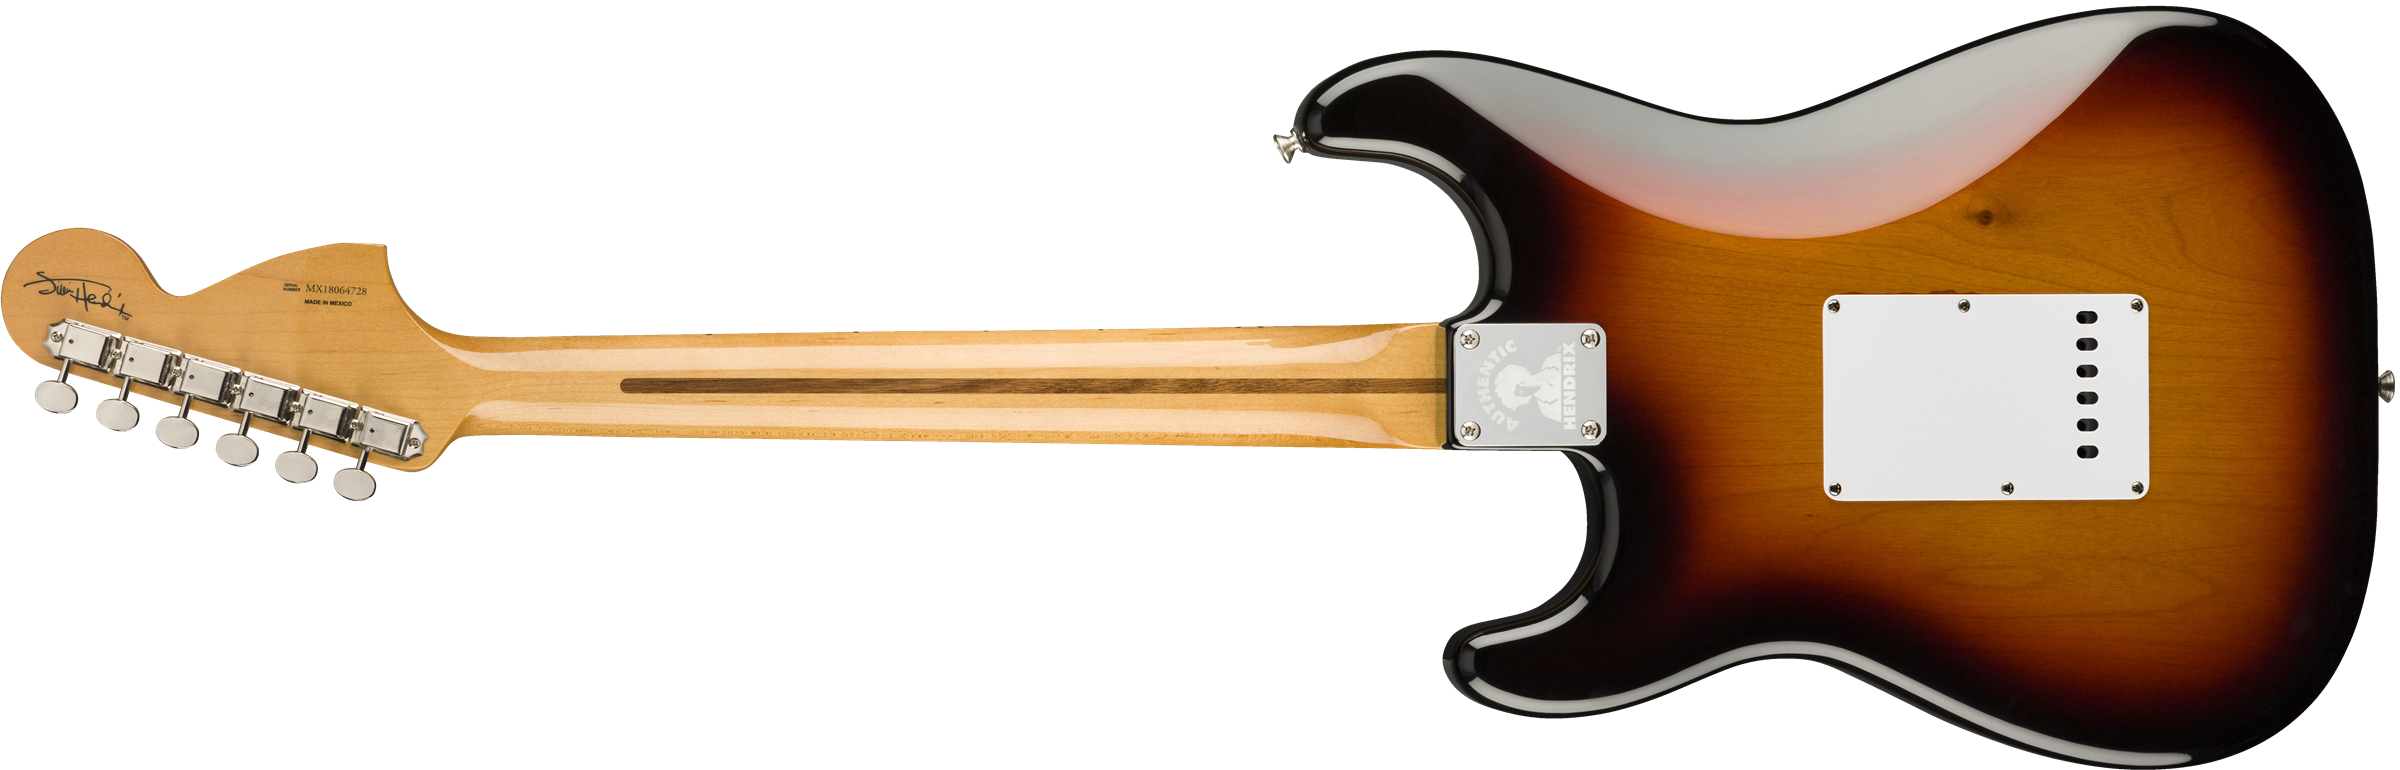 Fender Jimi Hendrix Strat Signature 2018 Mn - 3-color Sunburst - Guitare Électrique Forme Str - Variation 1